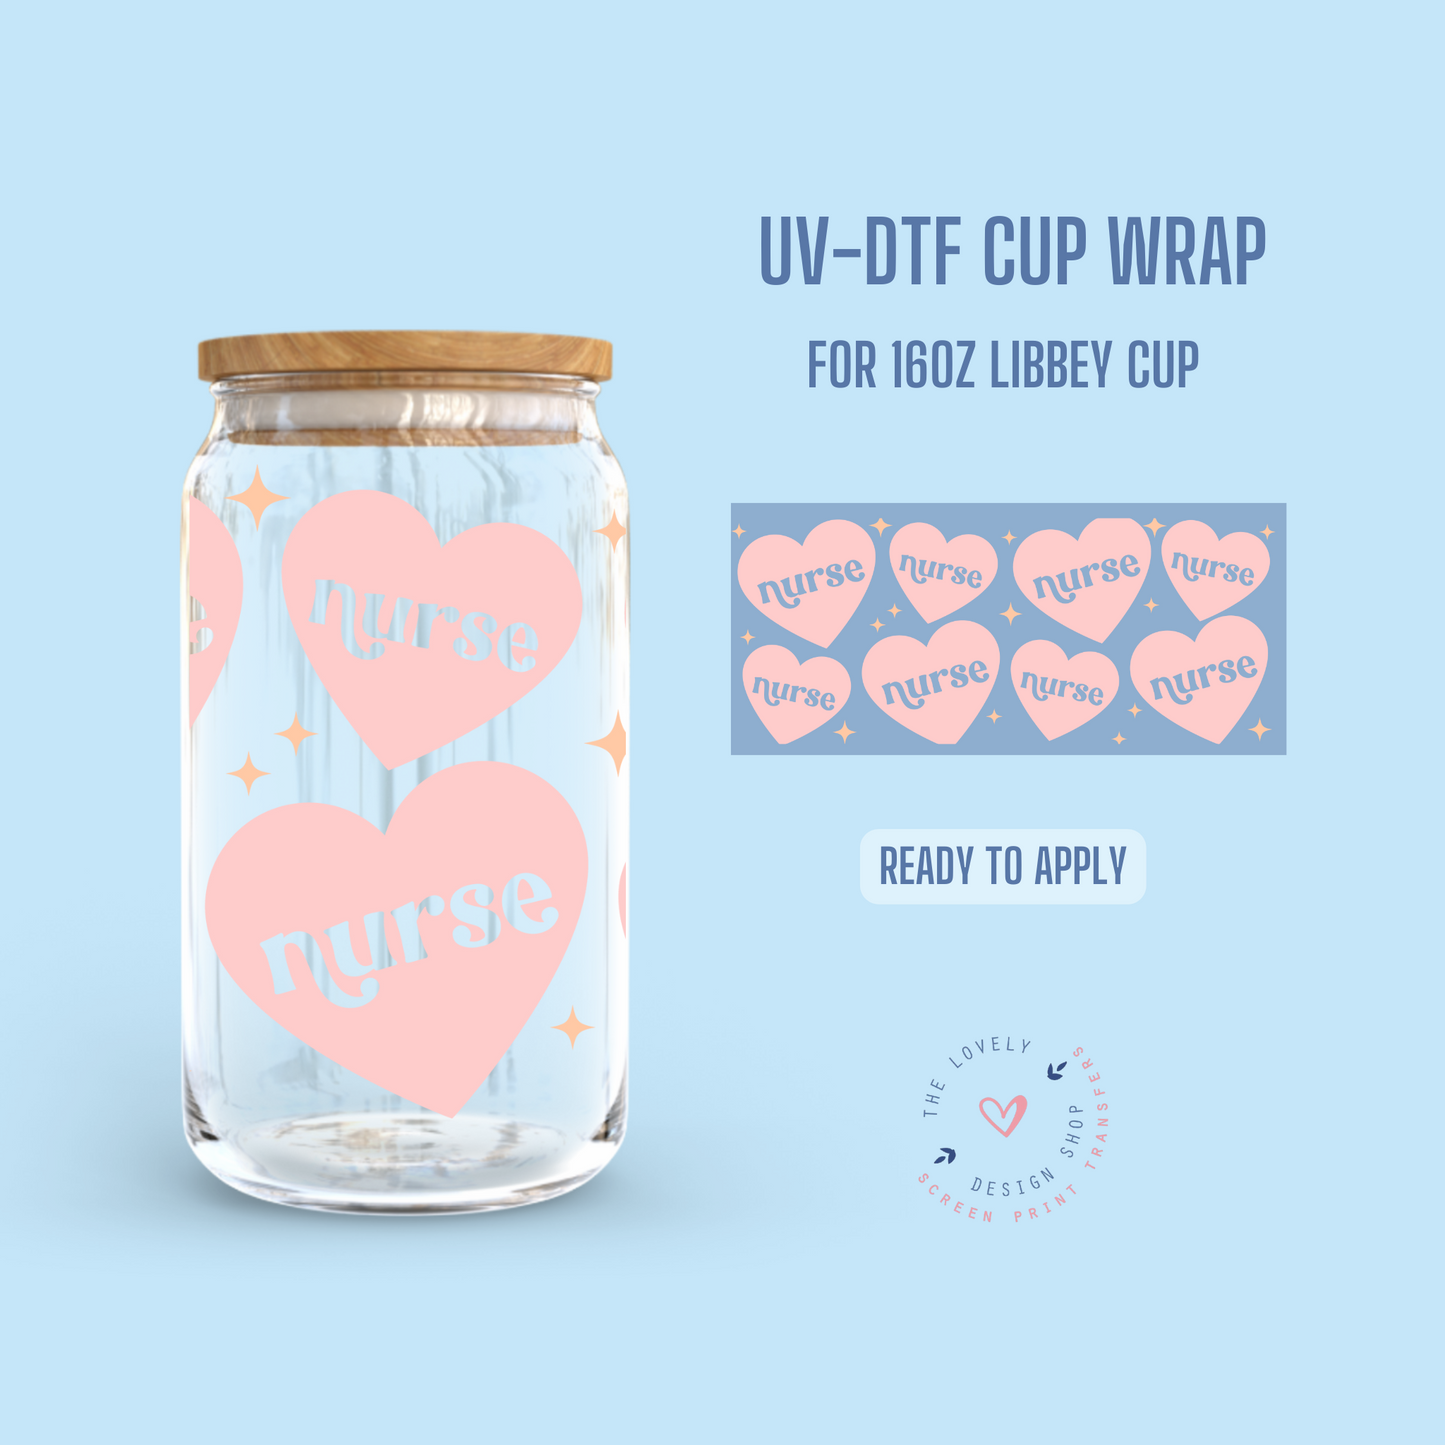 Nurse Heart - UV DTF 16 oz Libbey Cup Wrap (Ready to Ship)